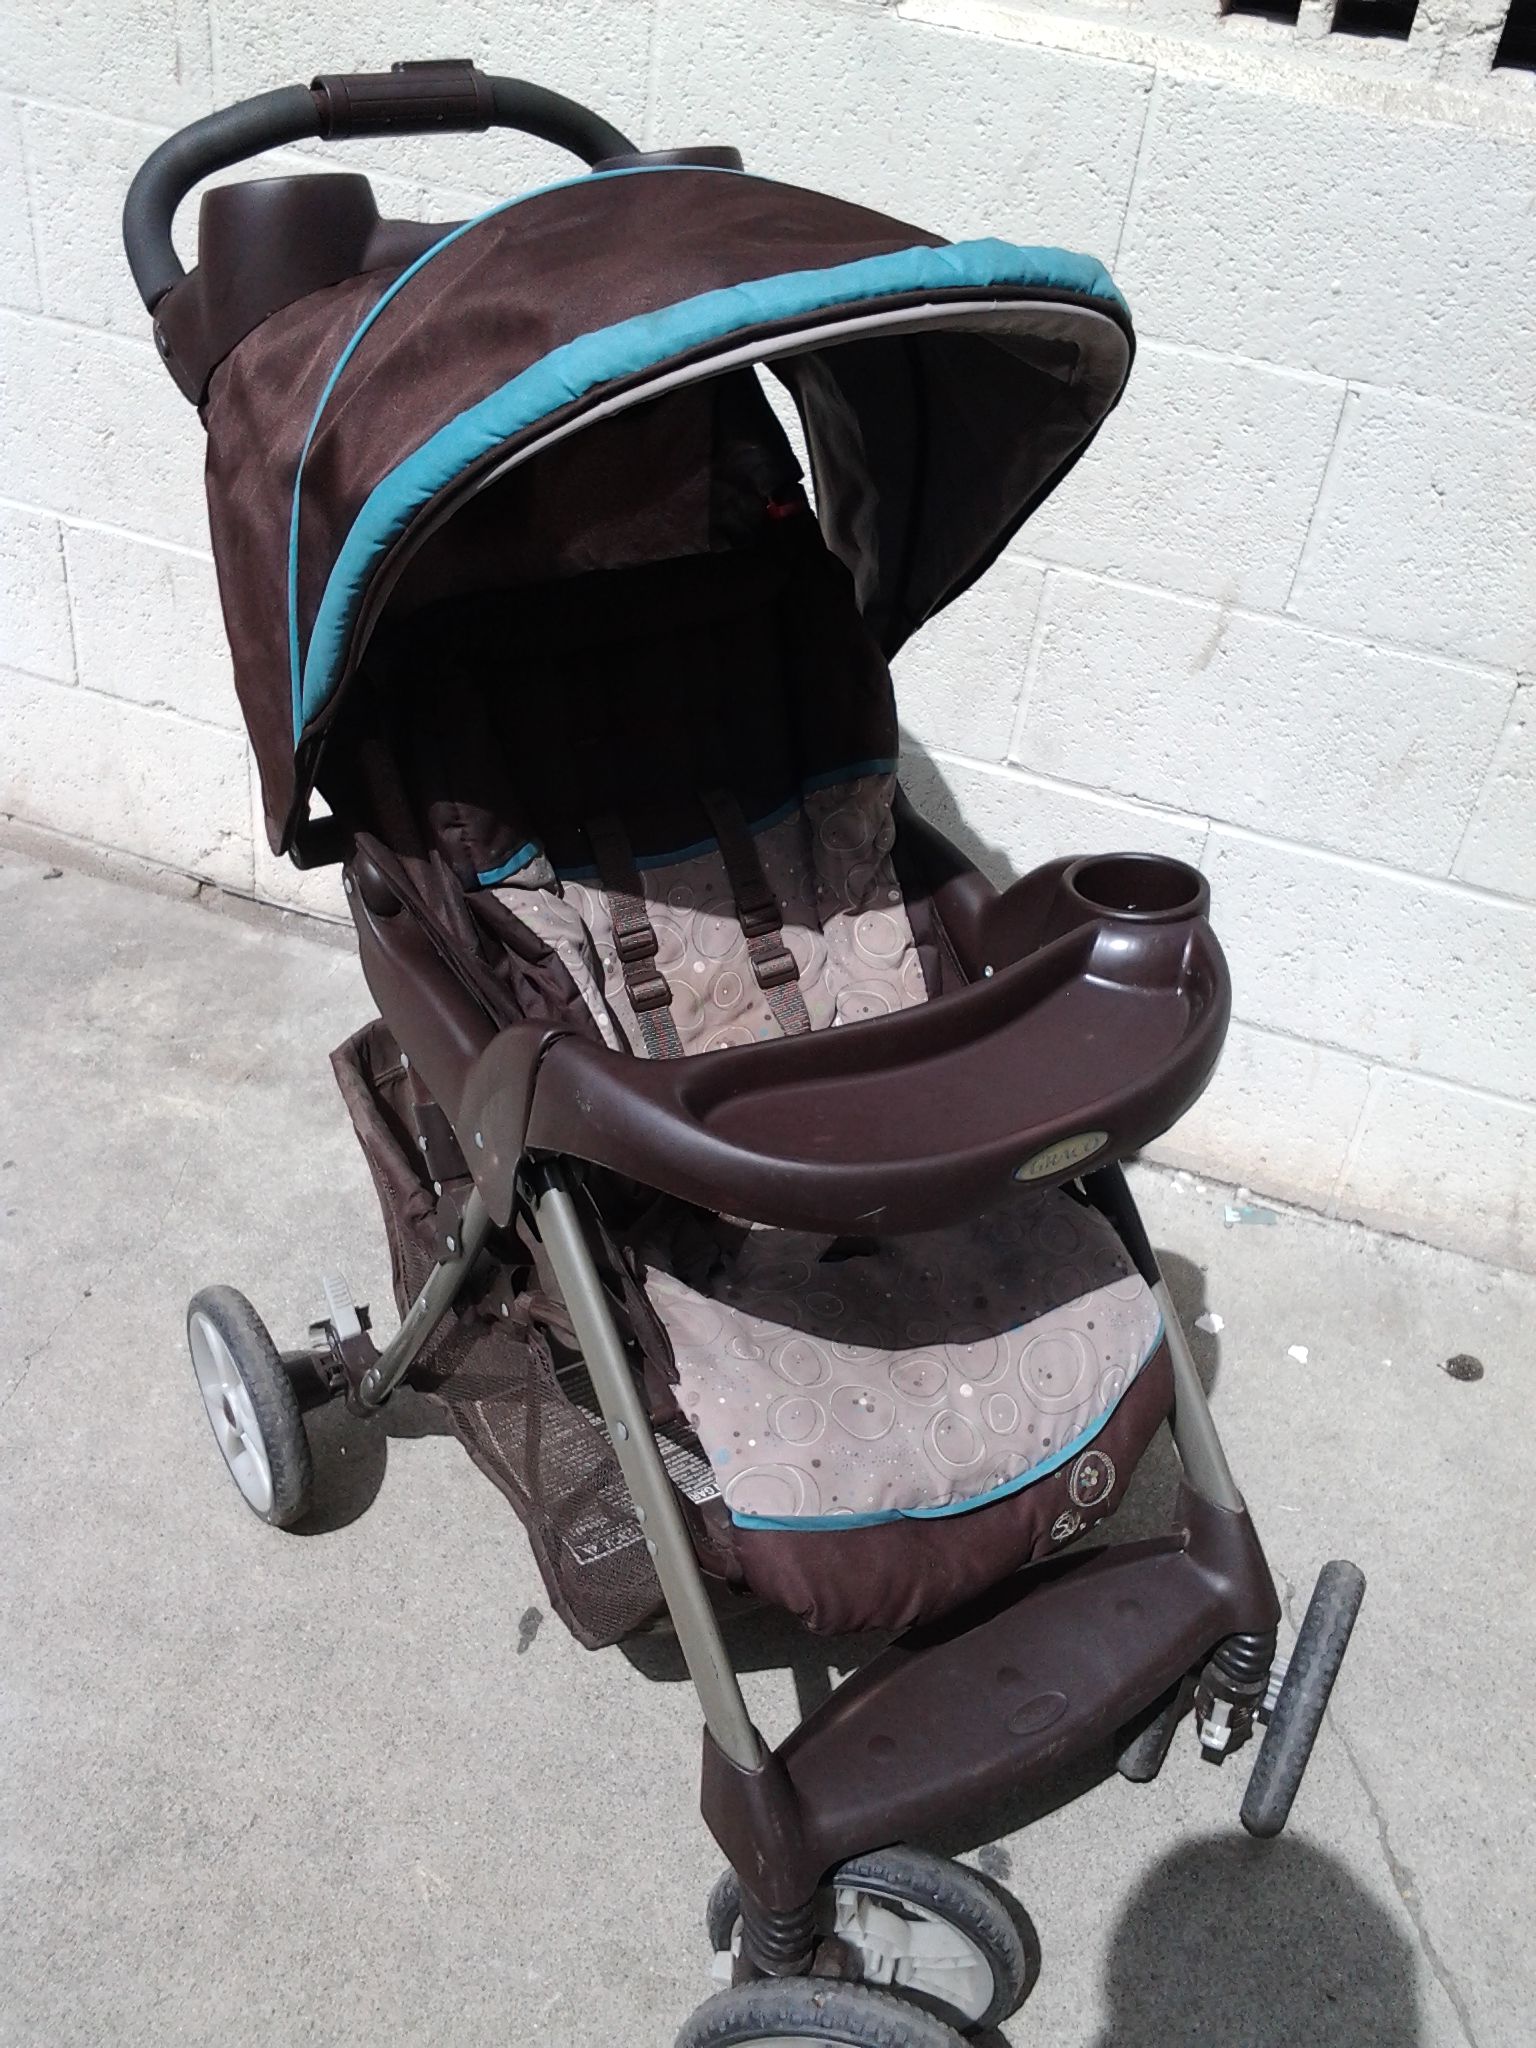 Kids / baby stroller